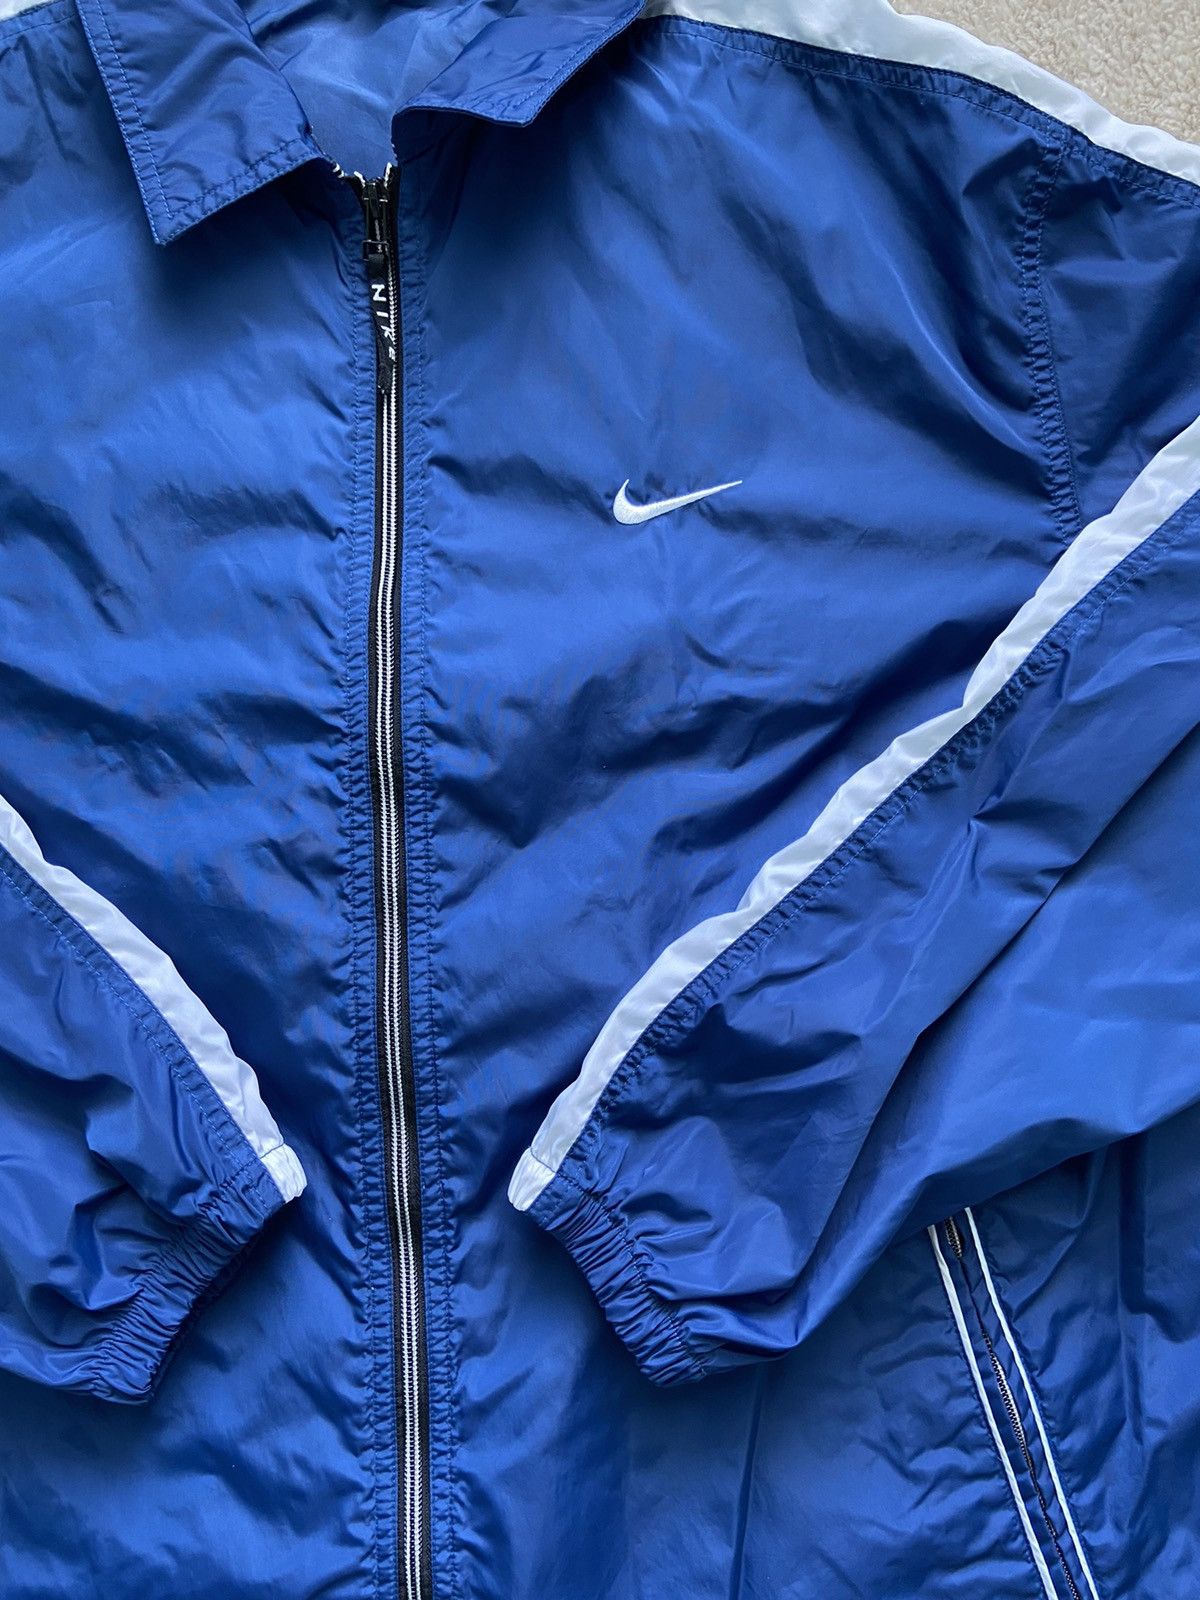 Nike Nike Full Zip Windbreaker Track Jacket Size L Size US L / EU 52-54 / 3 - 4 Thumbnail